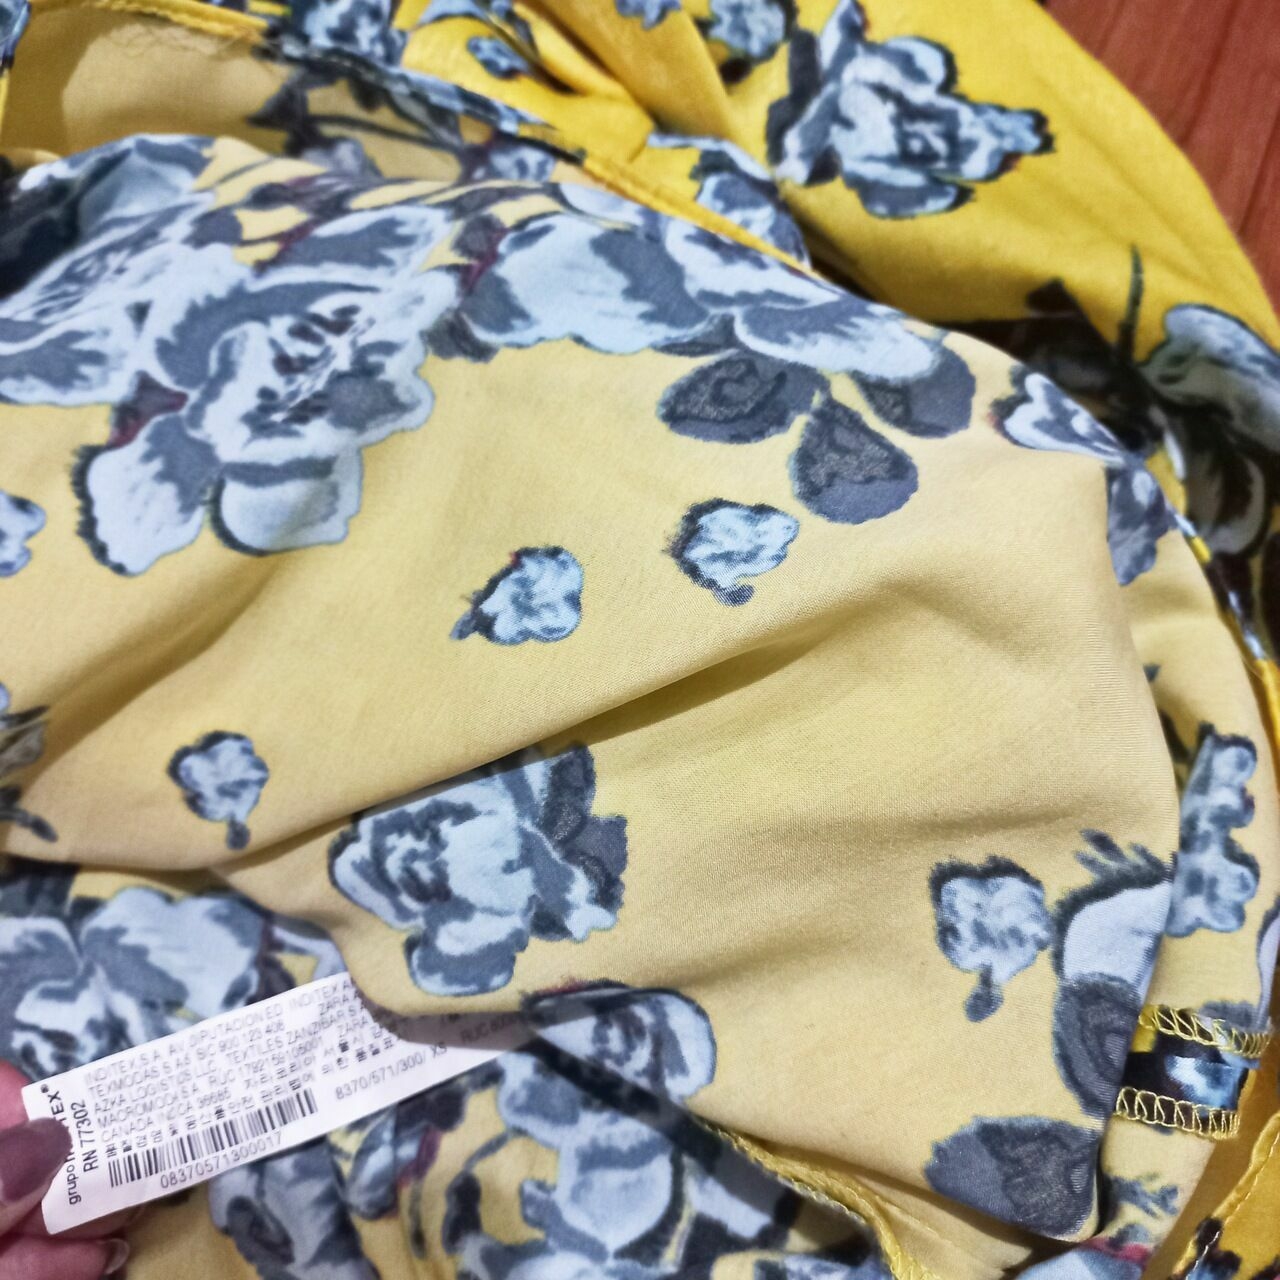 Zara Floral Yellow Midi Dress